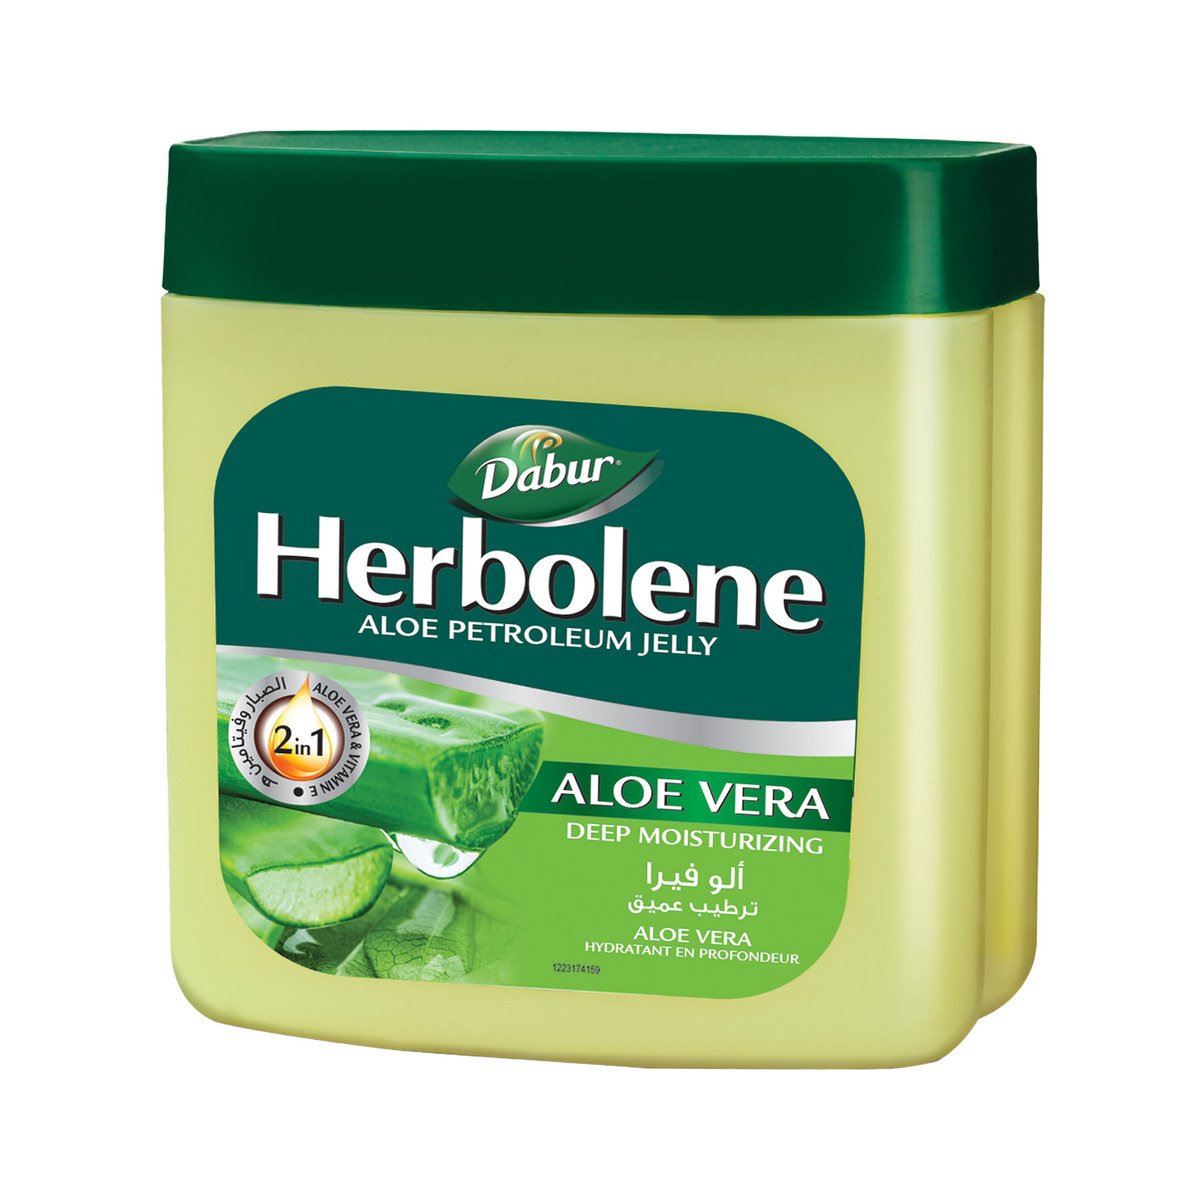 Dabur Herbolene Aloe Petroleum Jelly Enriched with Aloe Vera and Vitamin E 225 ml